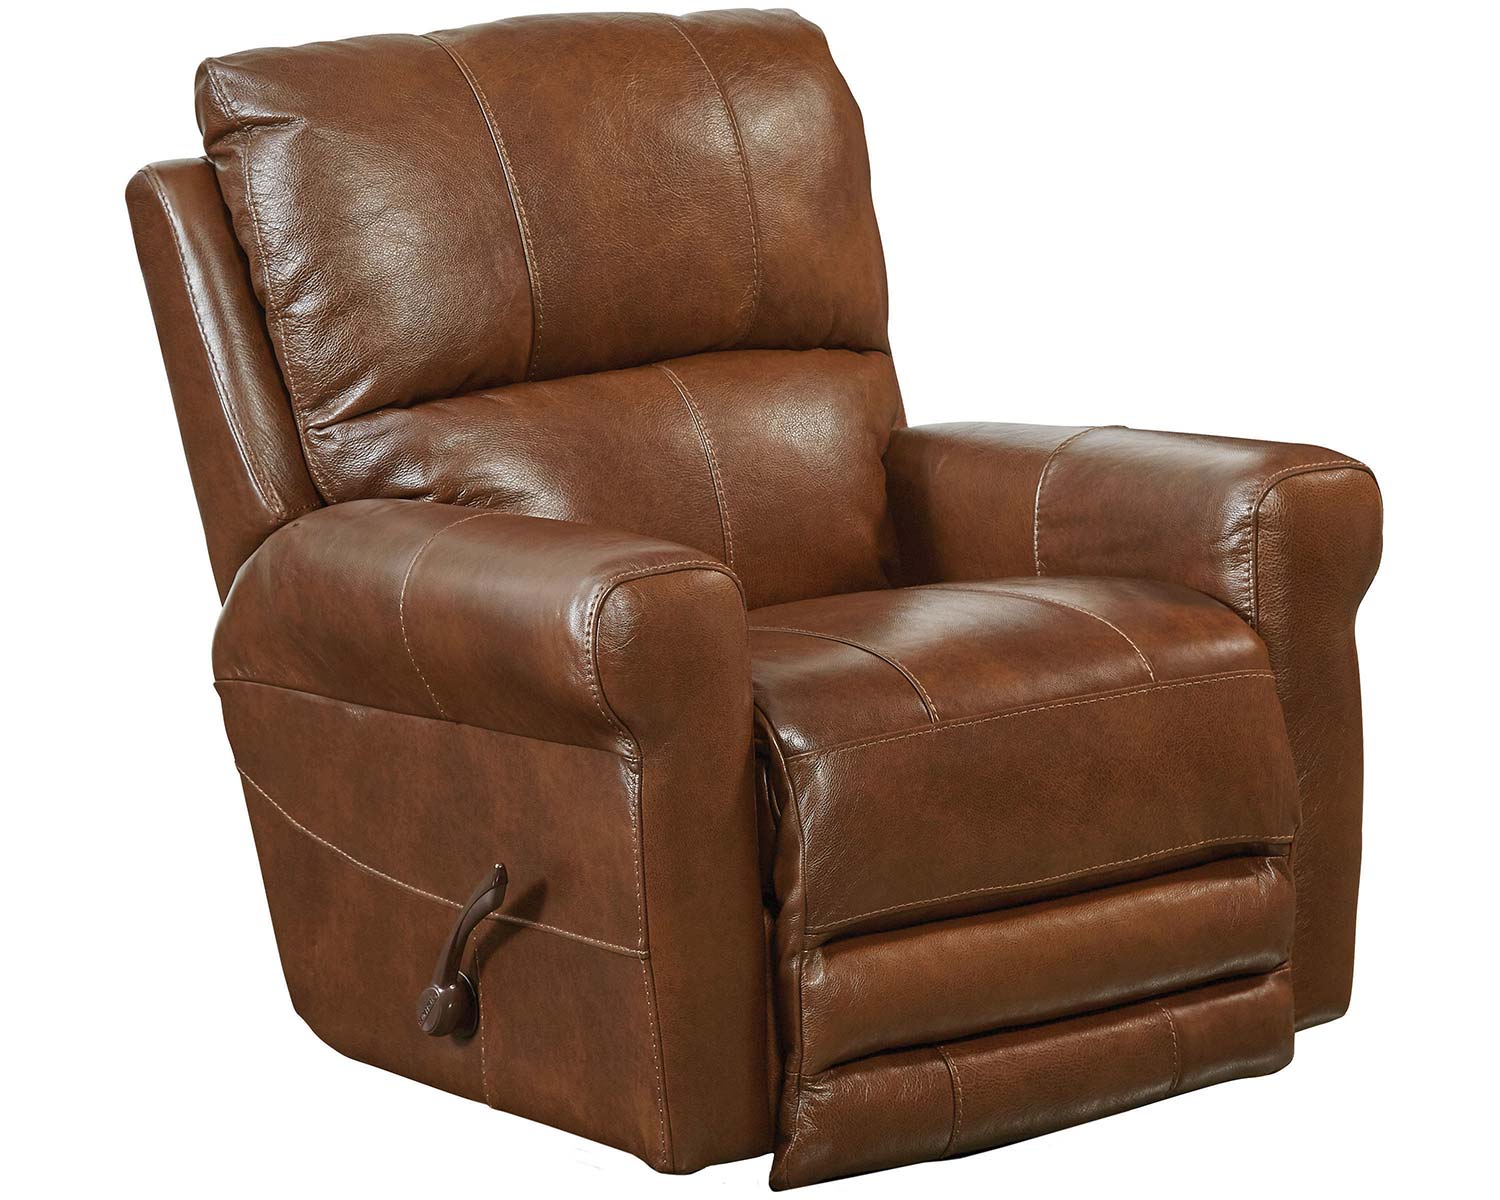 CatNapper Hoffner Leather Recliner Chair - Chestnut